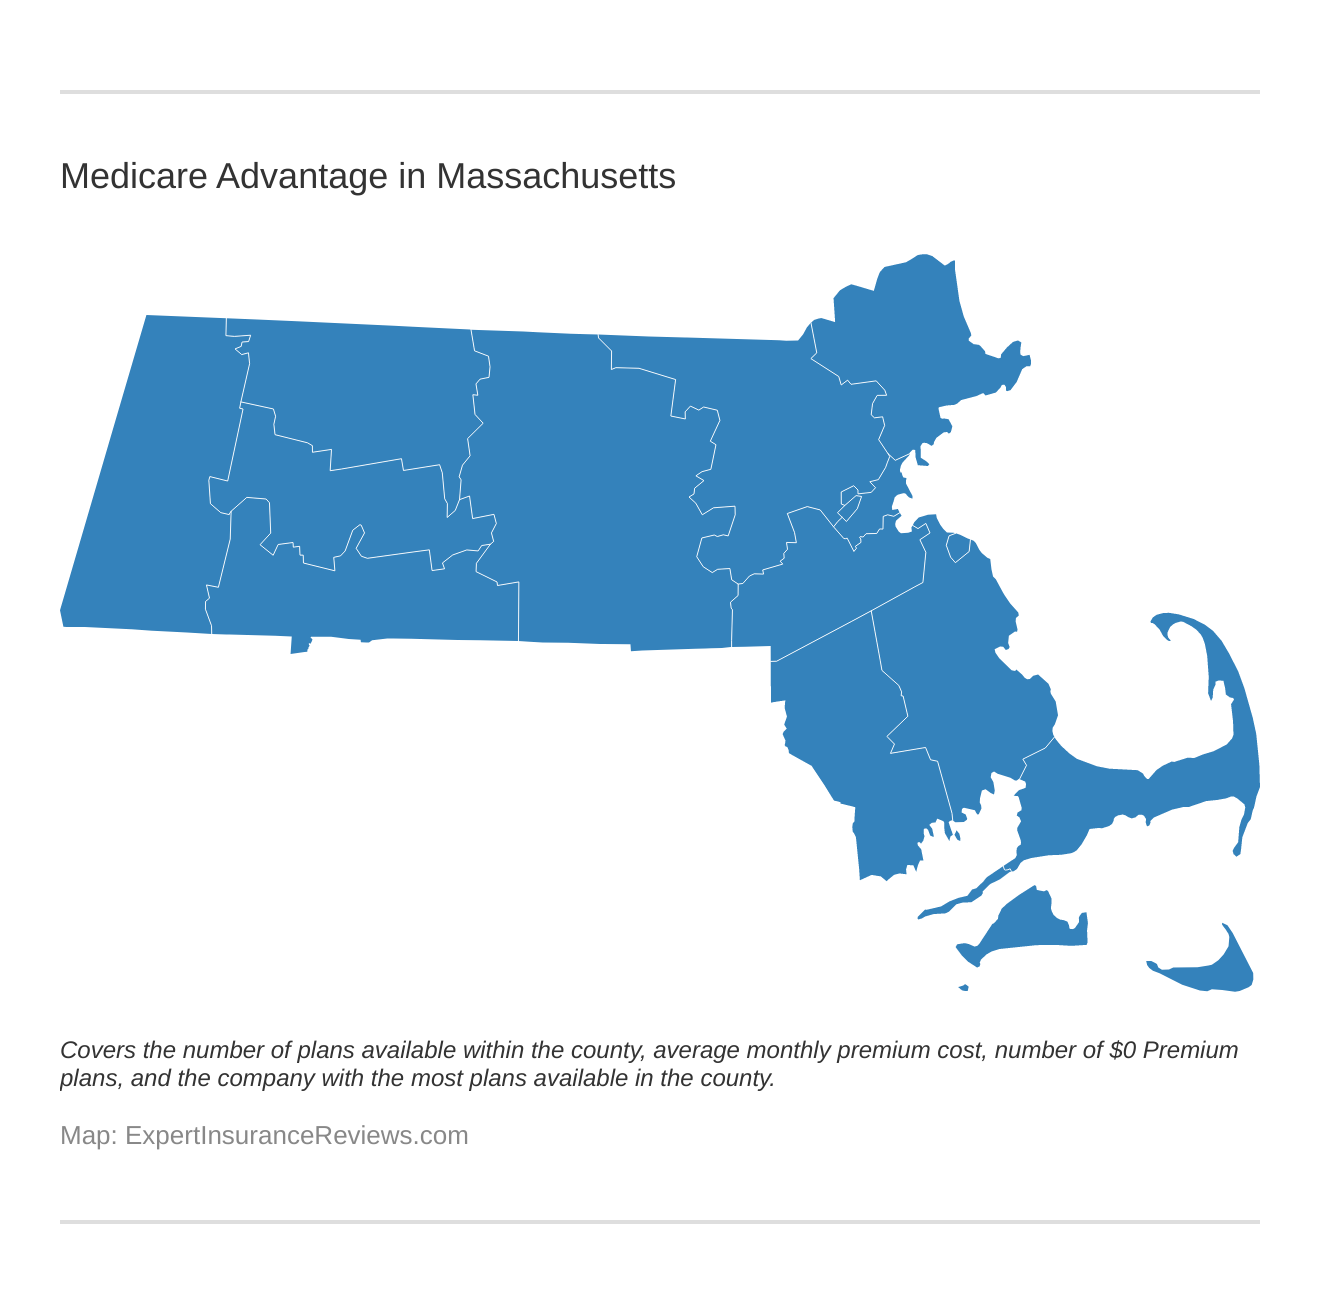 Medicare Advantage in Massachusetts